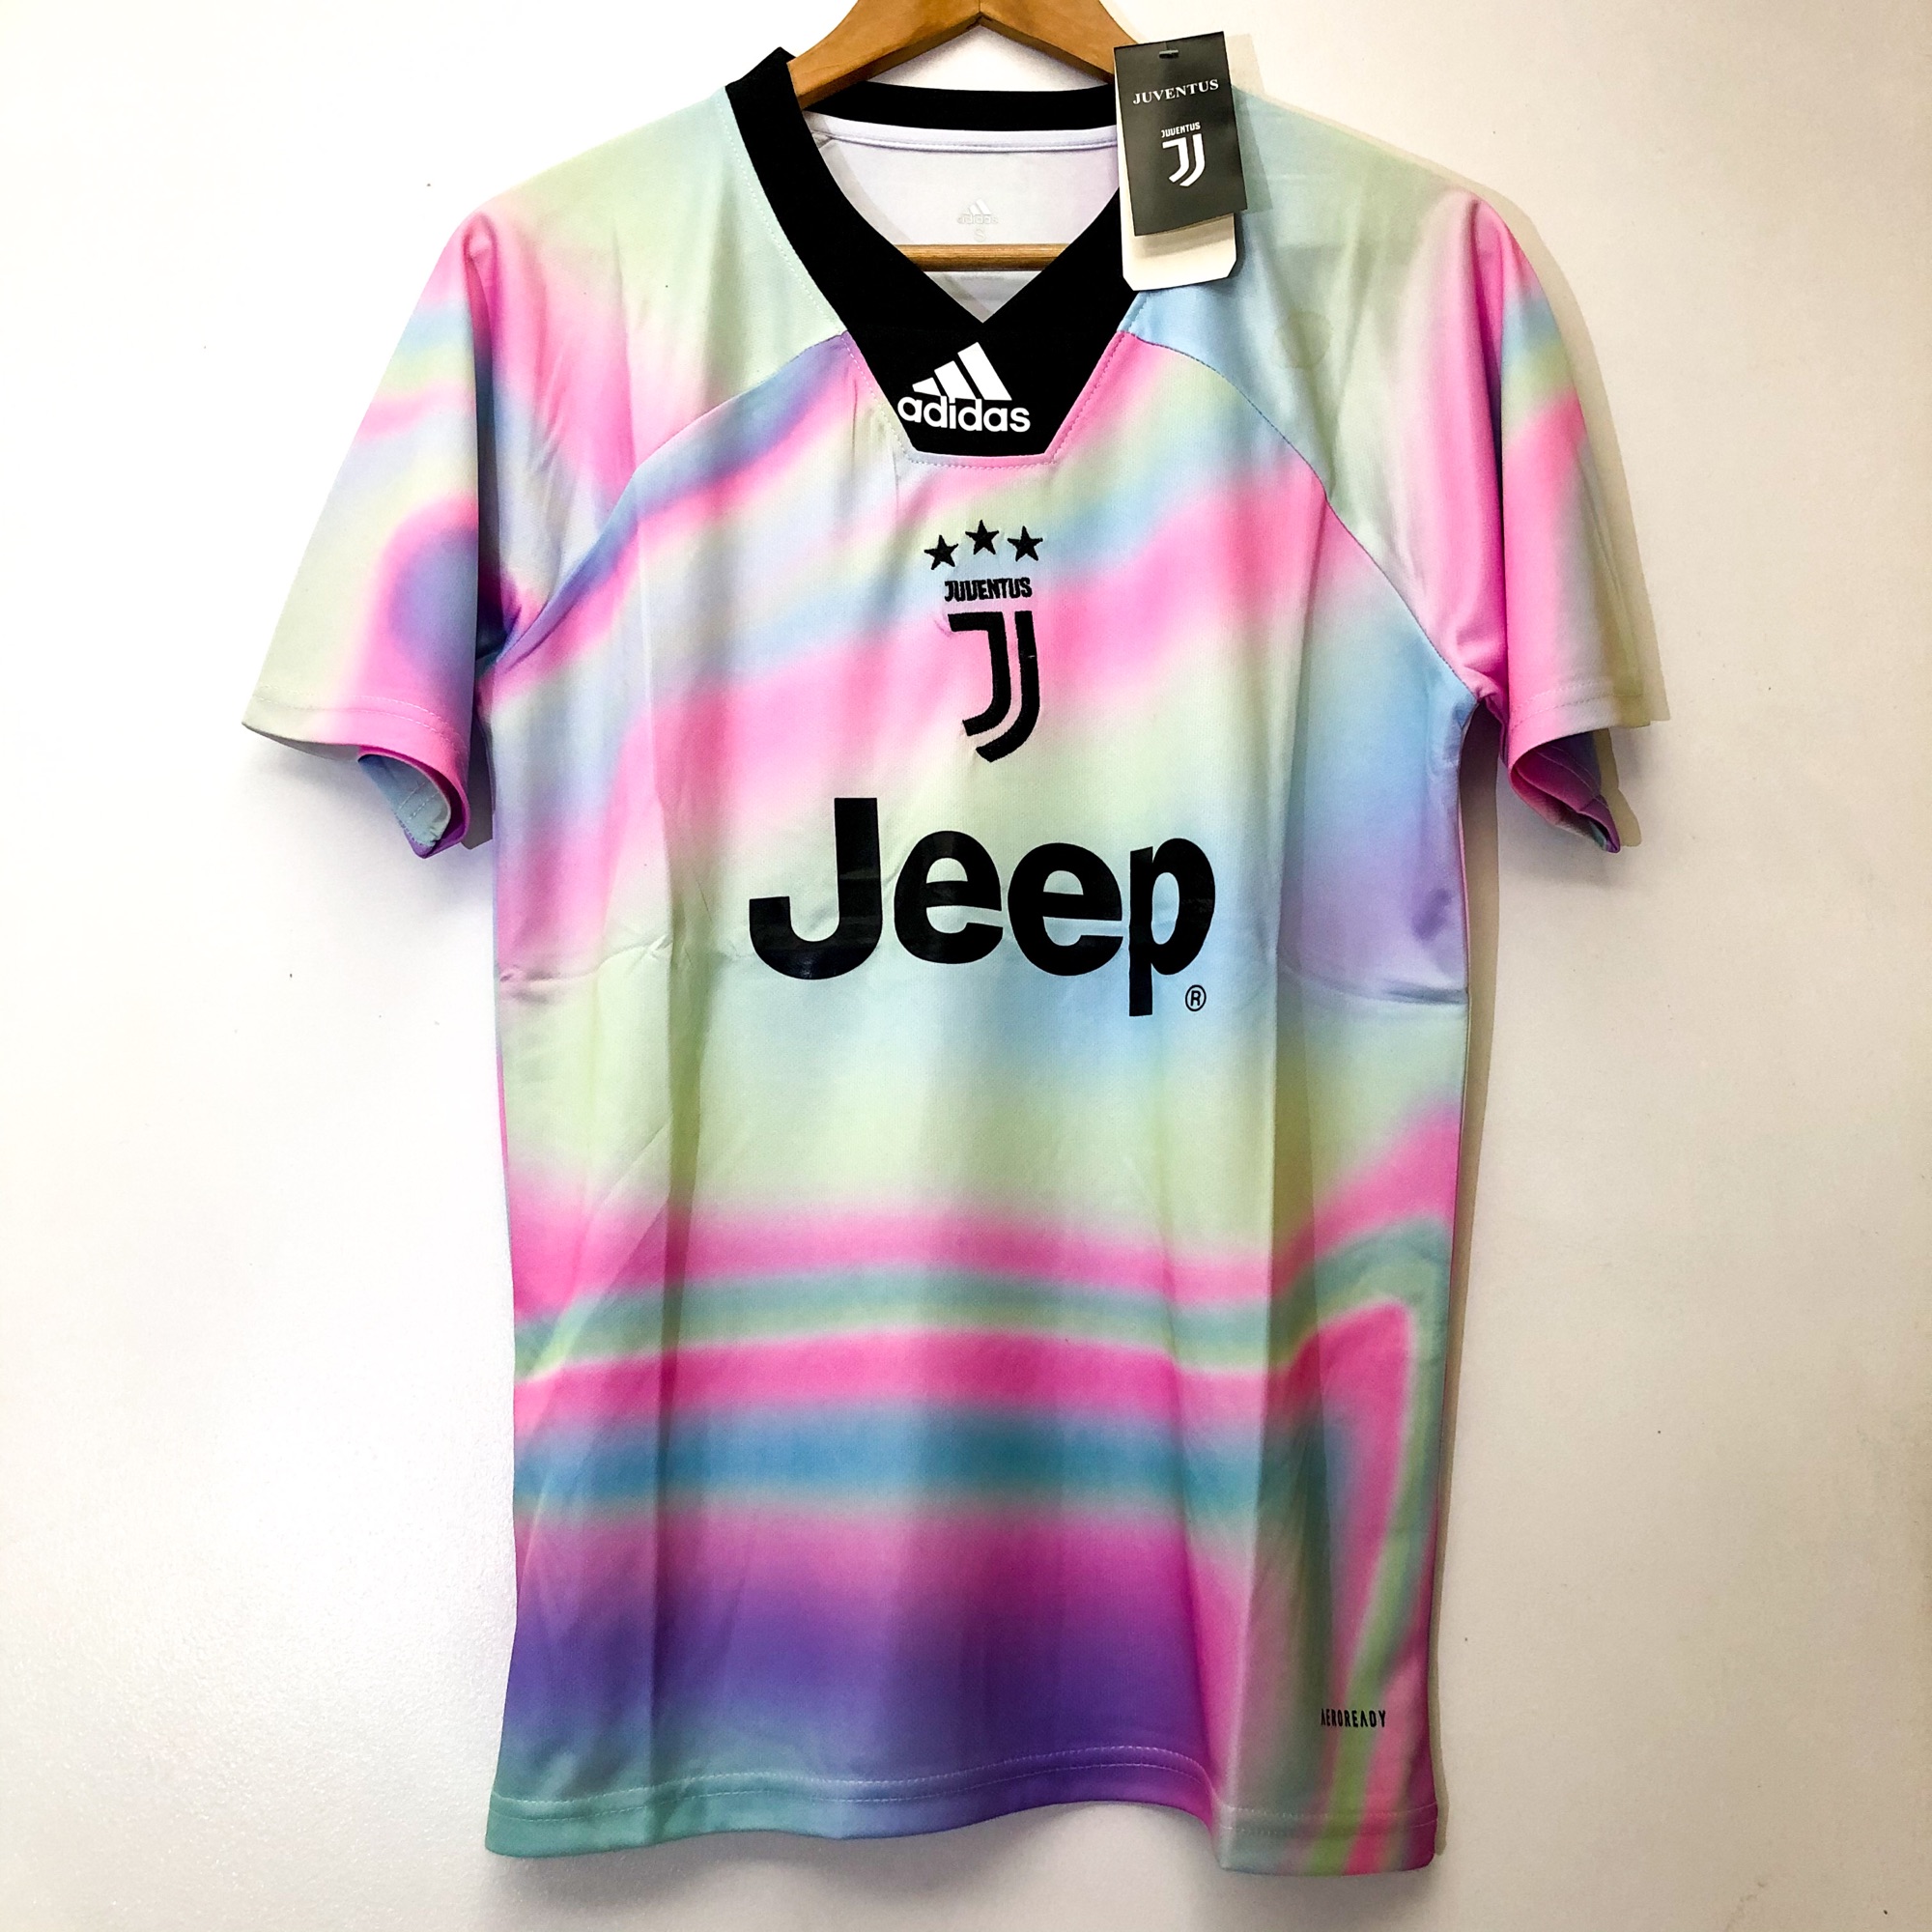 jeep t shirt adidas